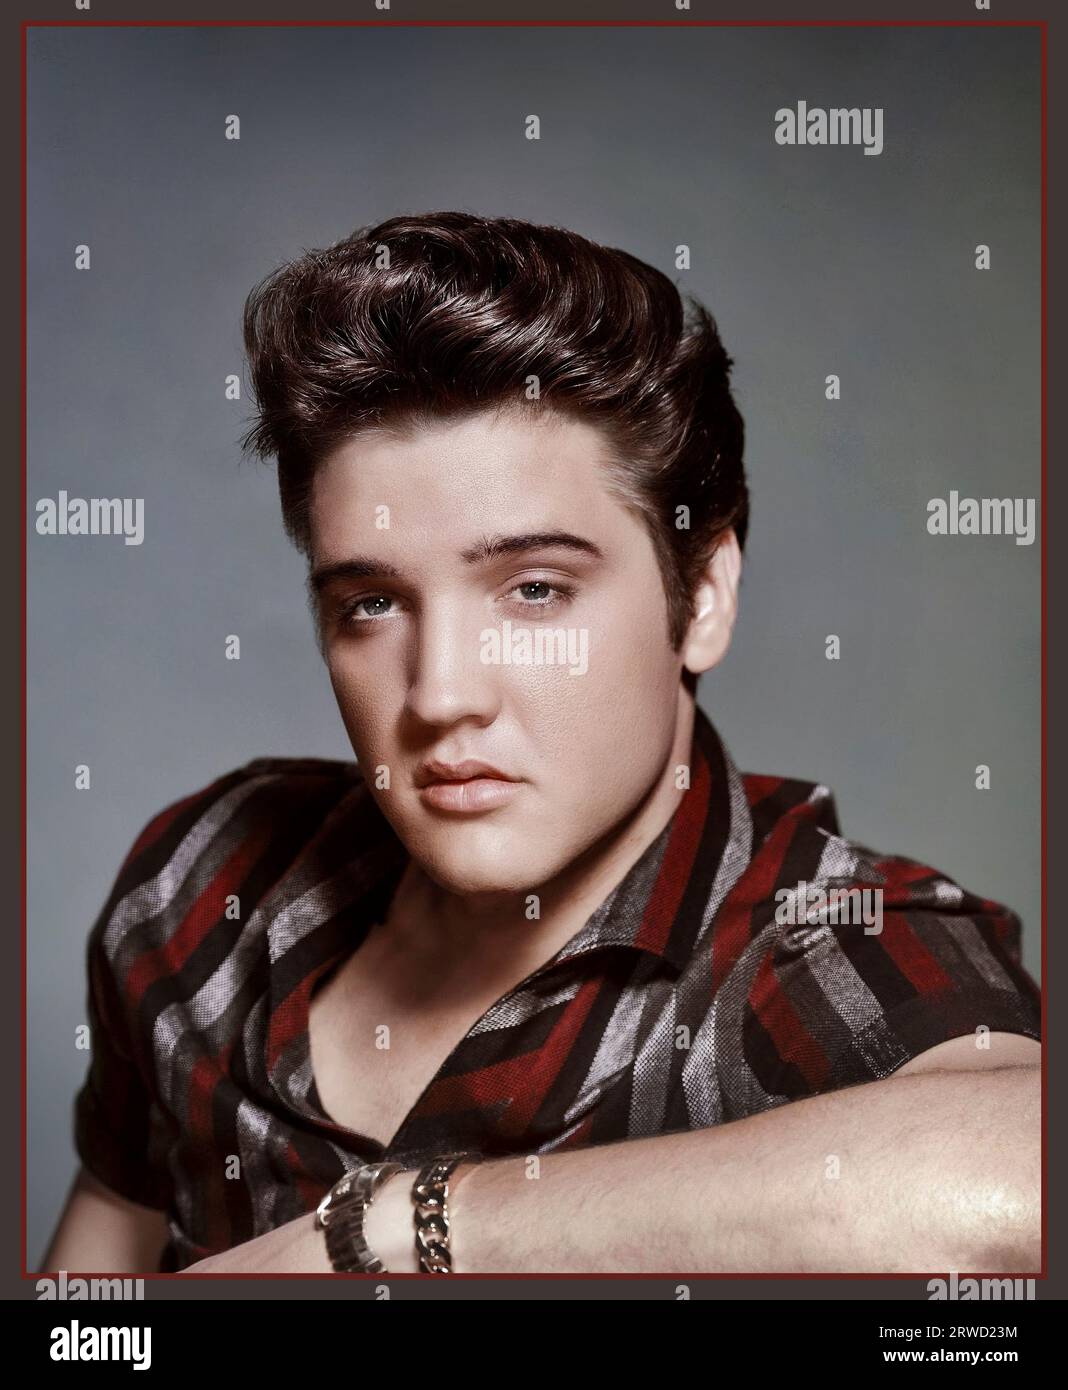 ELVIS PRESLEY '50's Vintage 1950's Hollywood film studio press  promotional color colour portrait still of Elvis Presley iconic rock & roll singer film artist Stock Photo